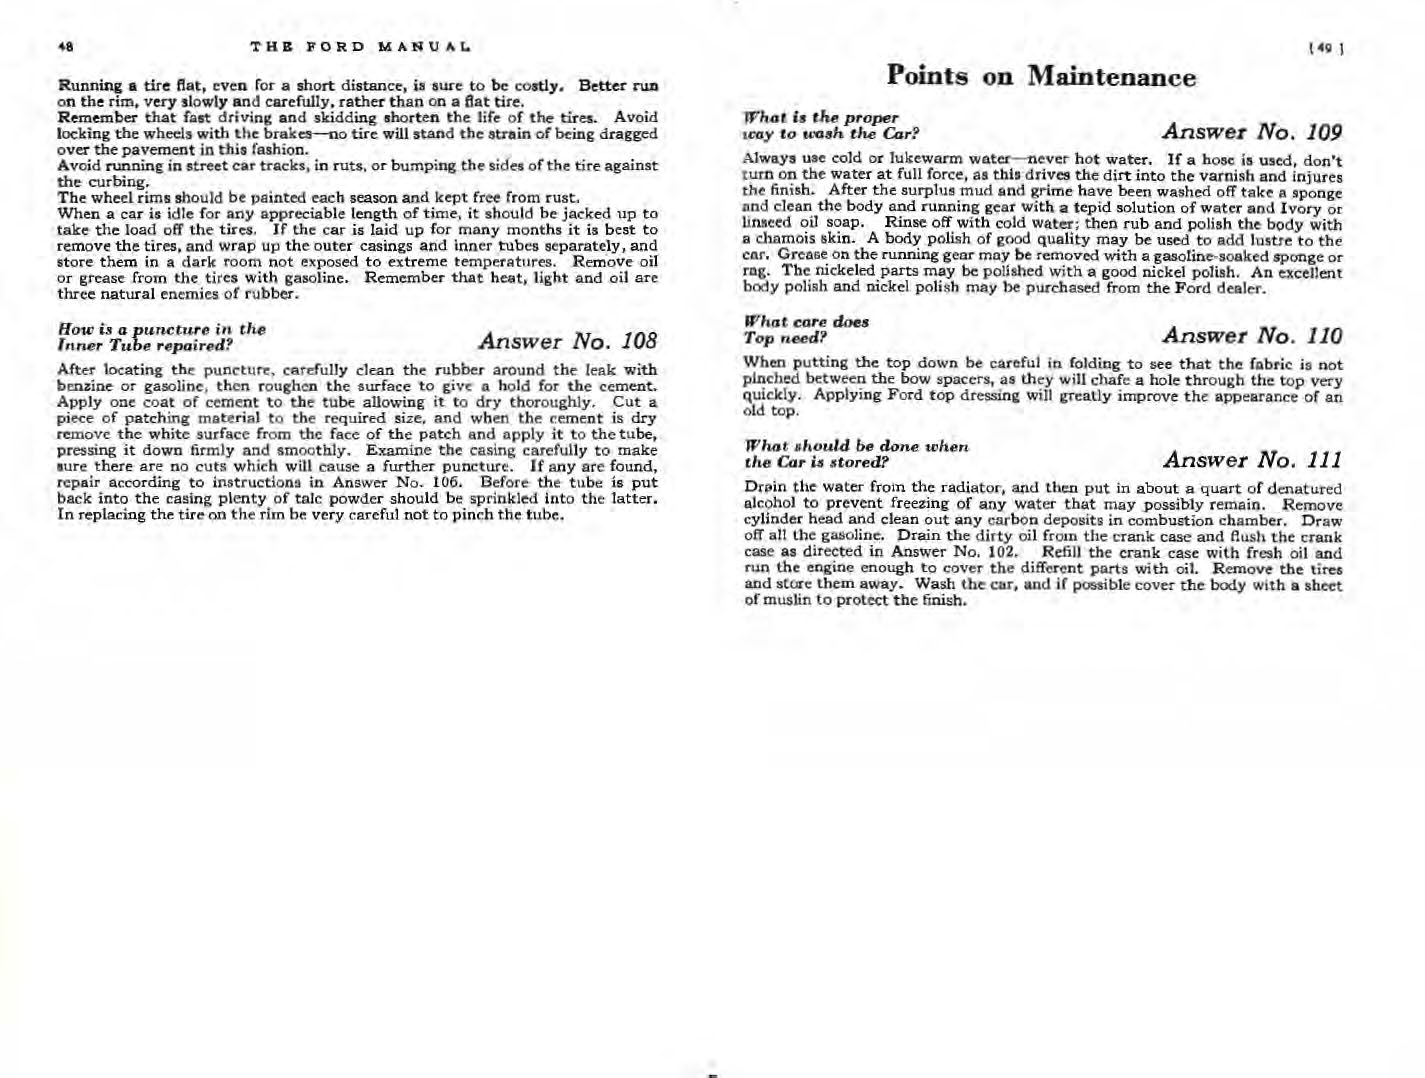 n_1926 Ford Owners Manual-48-49.jpg